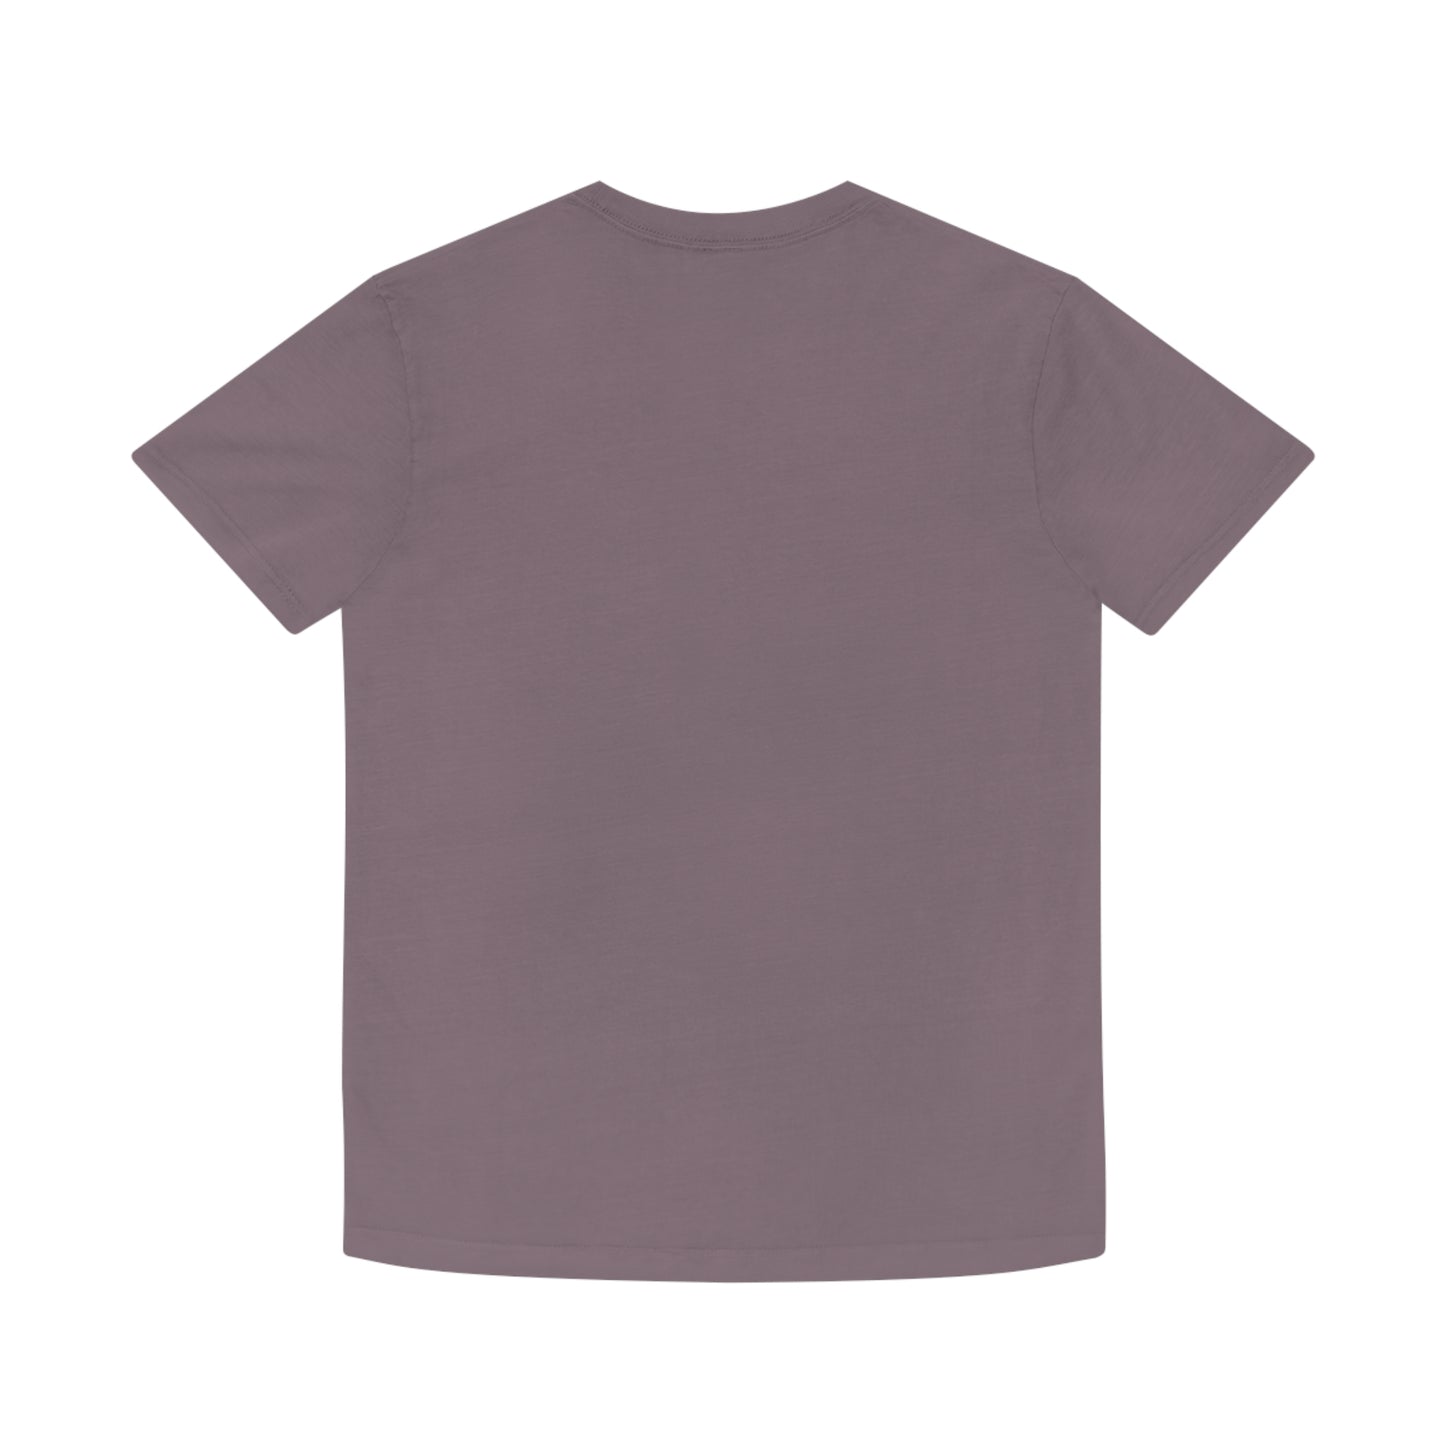 Northern Beaches Palm Beach AS Colour 100% Cotton Unisex Faded Shirt